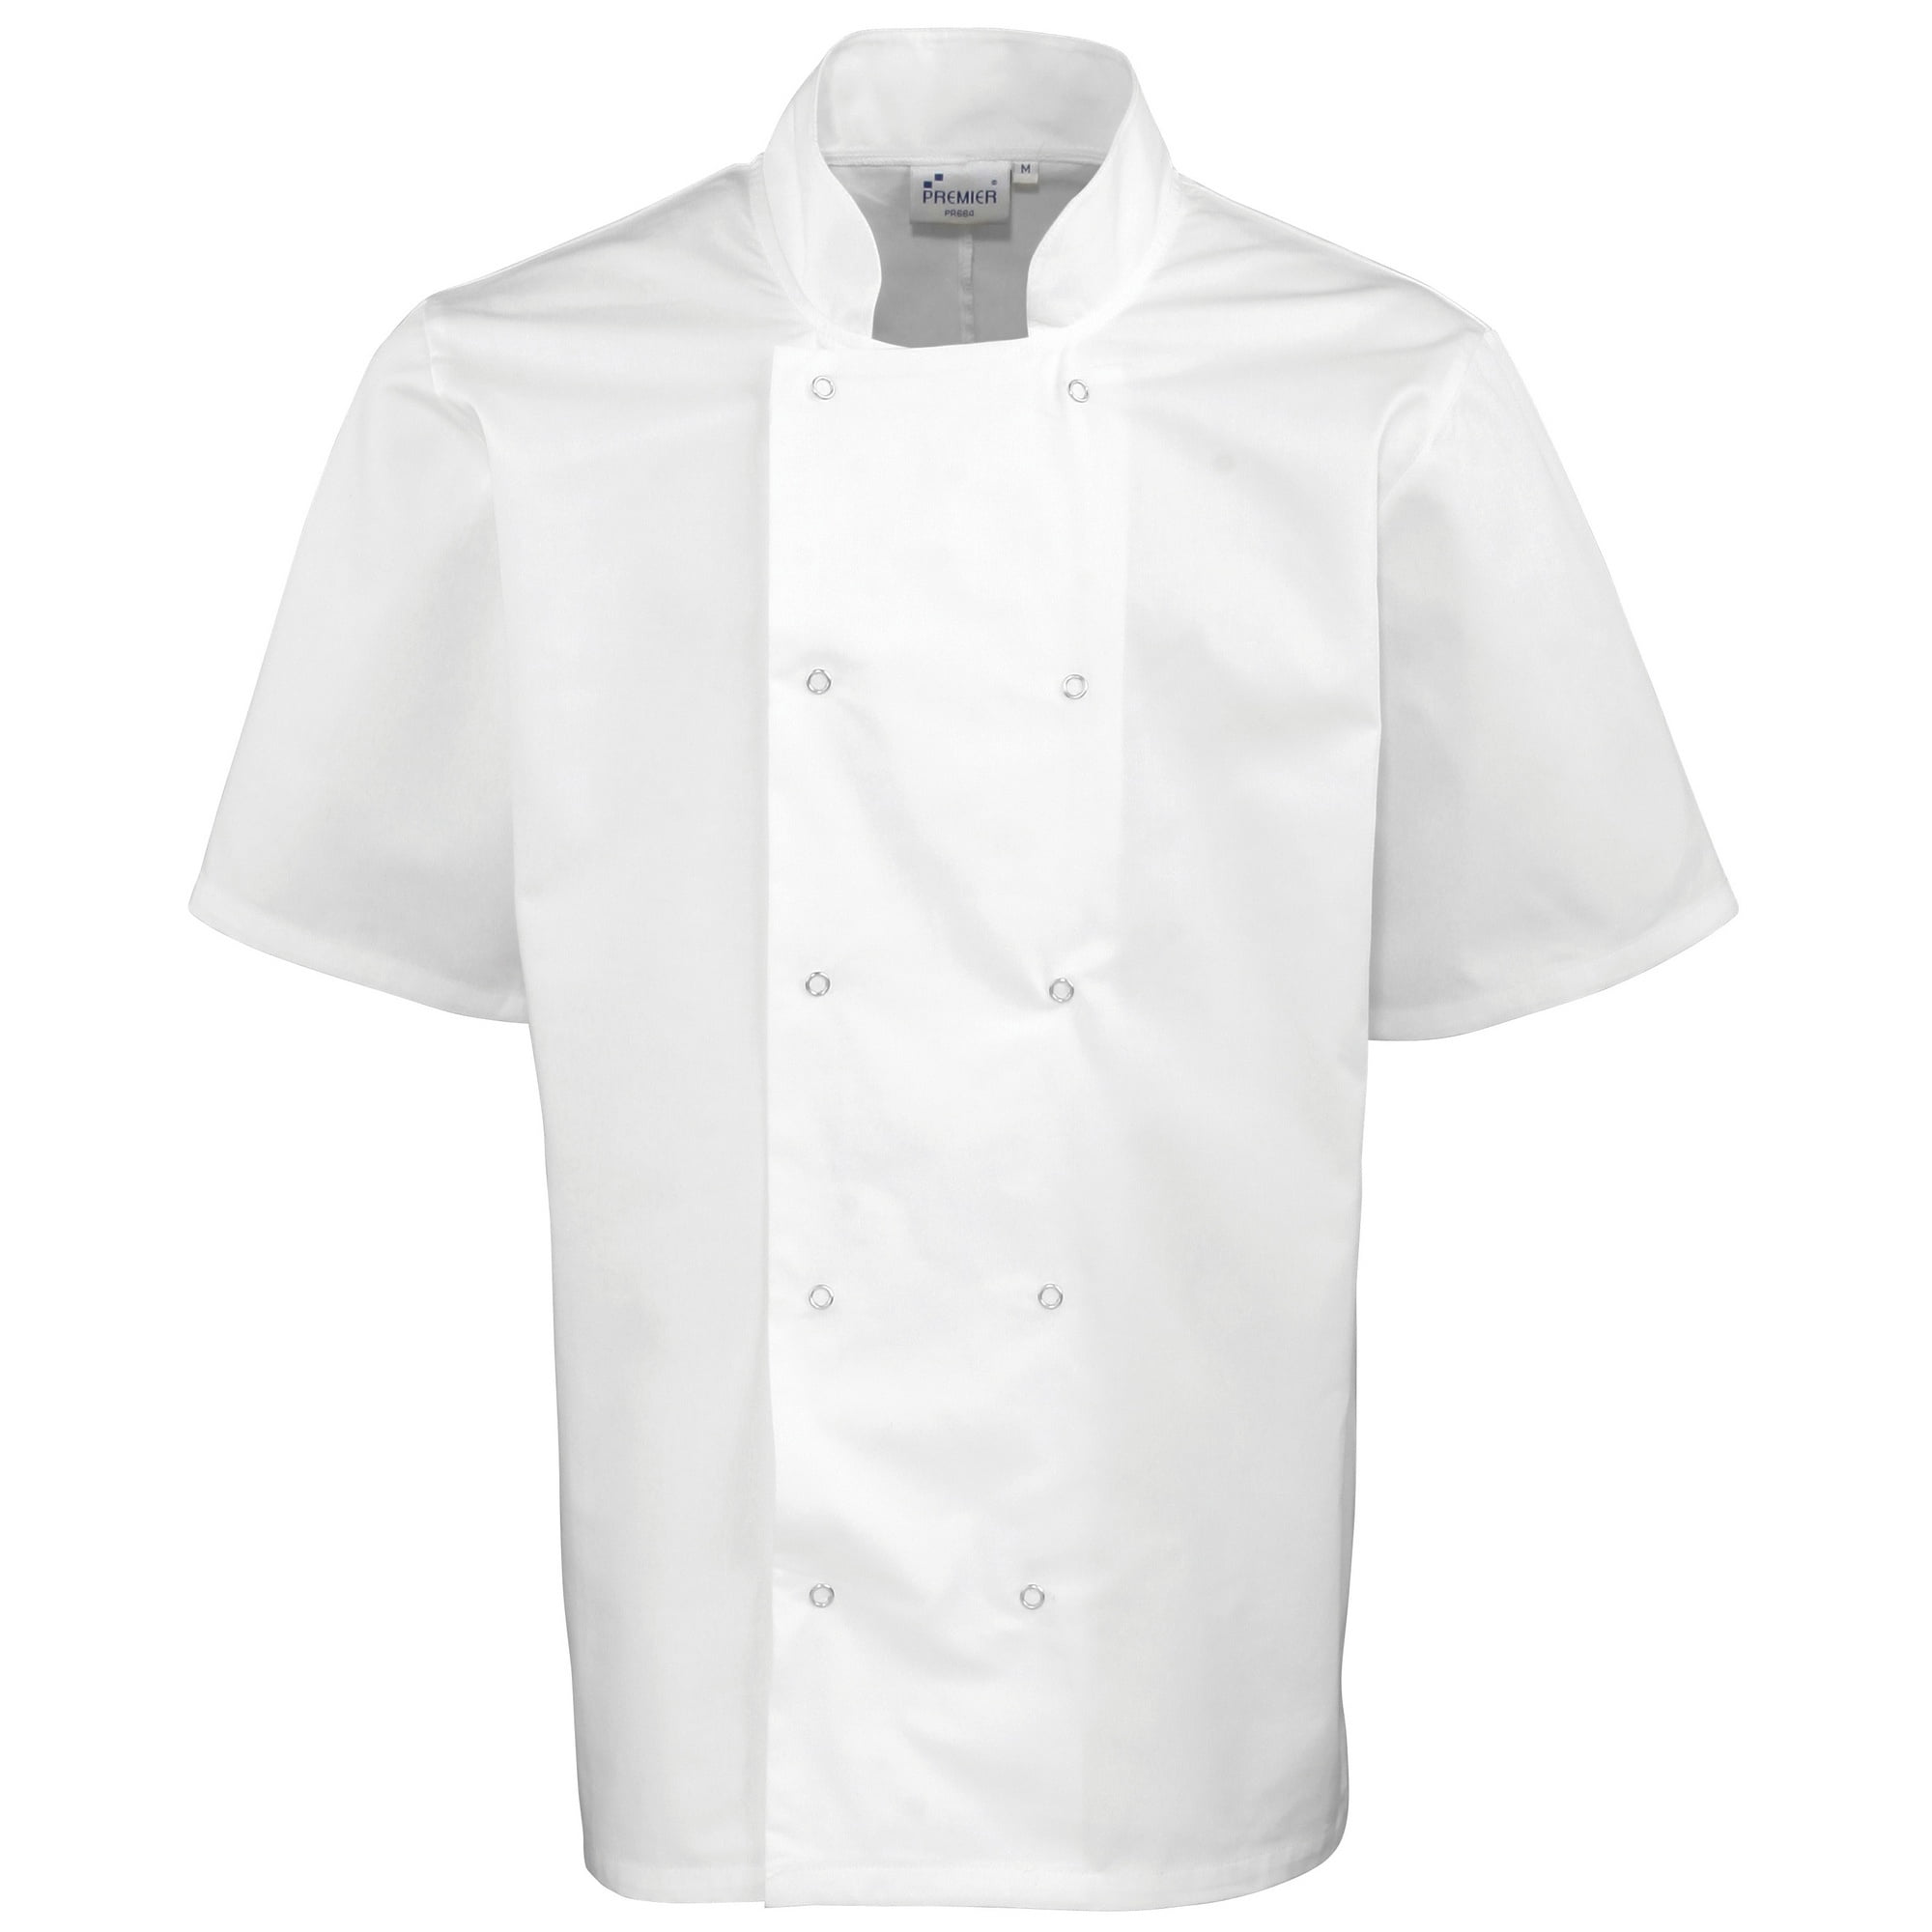 Unisex Personalised Embroidered Chef's Short Sleeve Black White Jacket PR664 